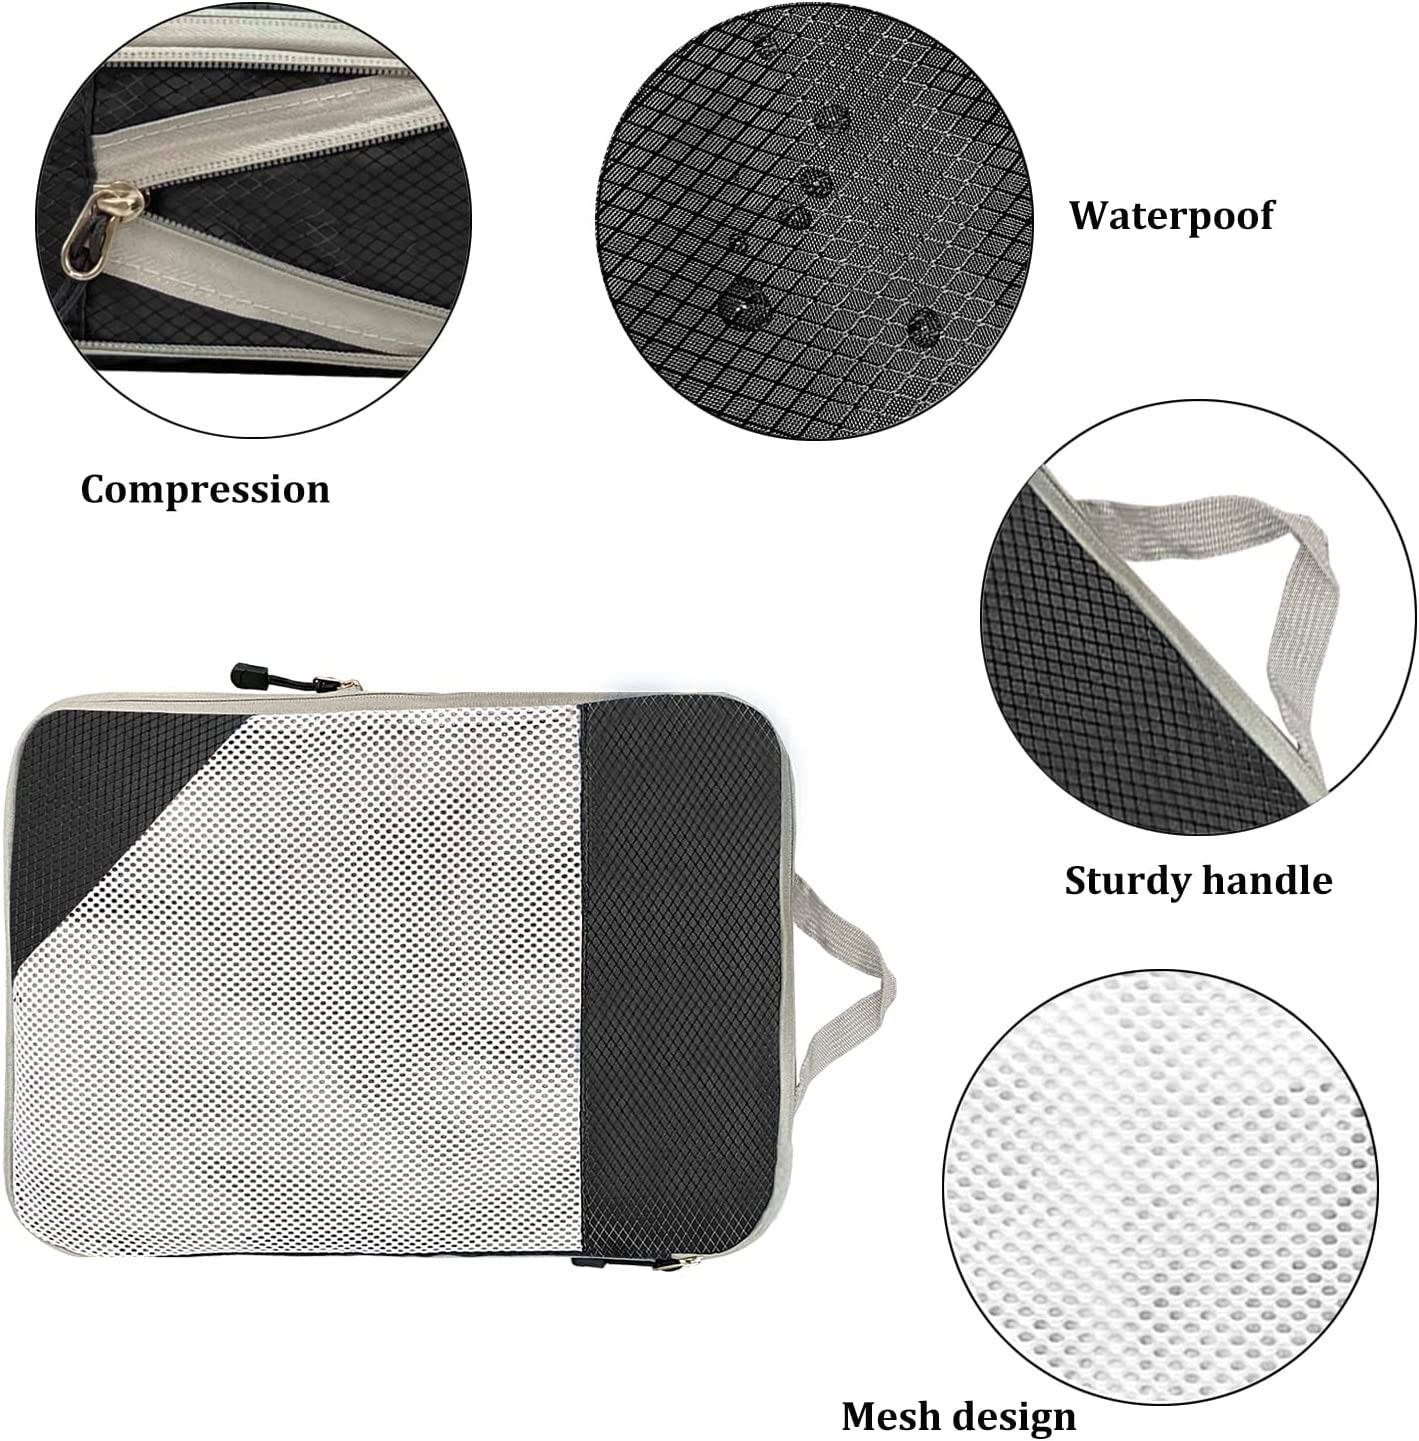 Compression Clothes Organizer Bag Set Product Details